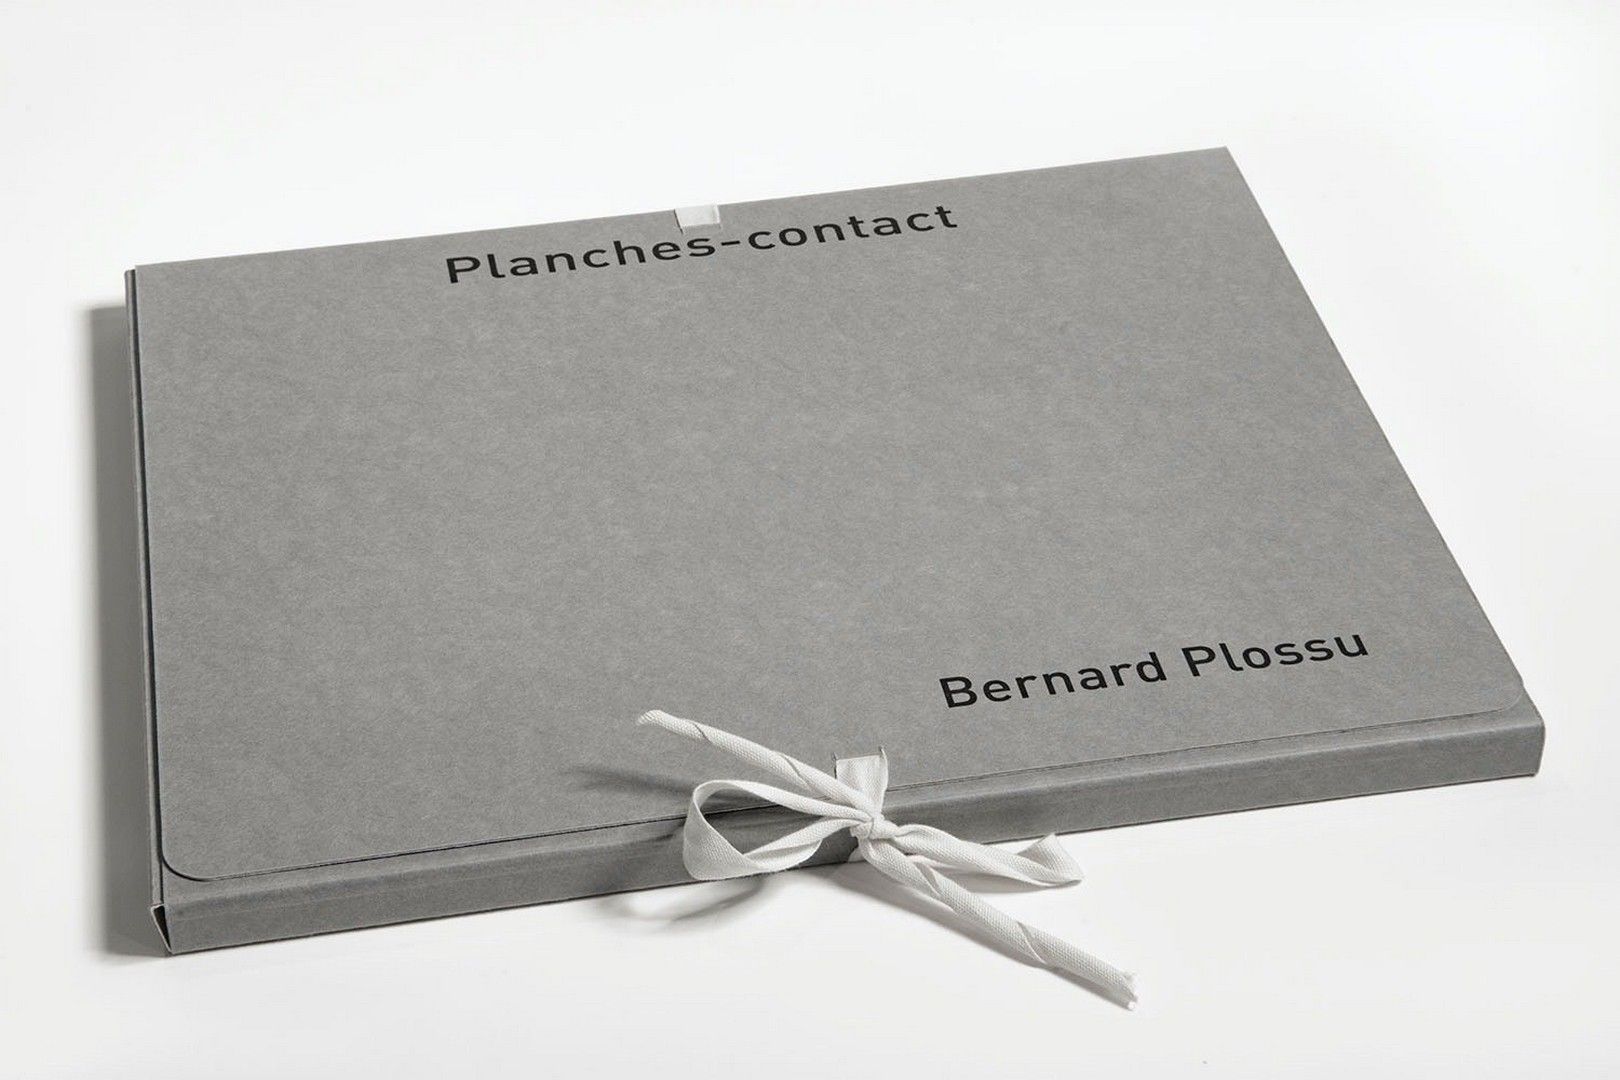 BERNARD PLOSSU 1945- BERNARD PLOSSU 1945-
"Portfolio Planches-contact", Éditions&hellip;